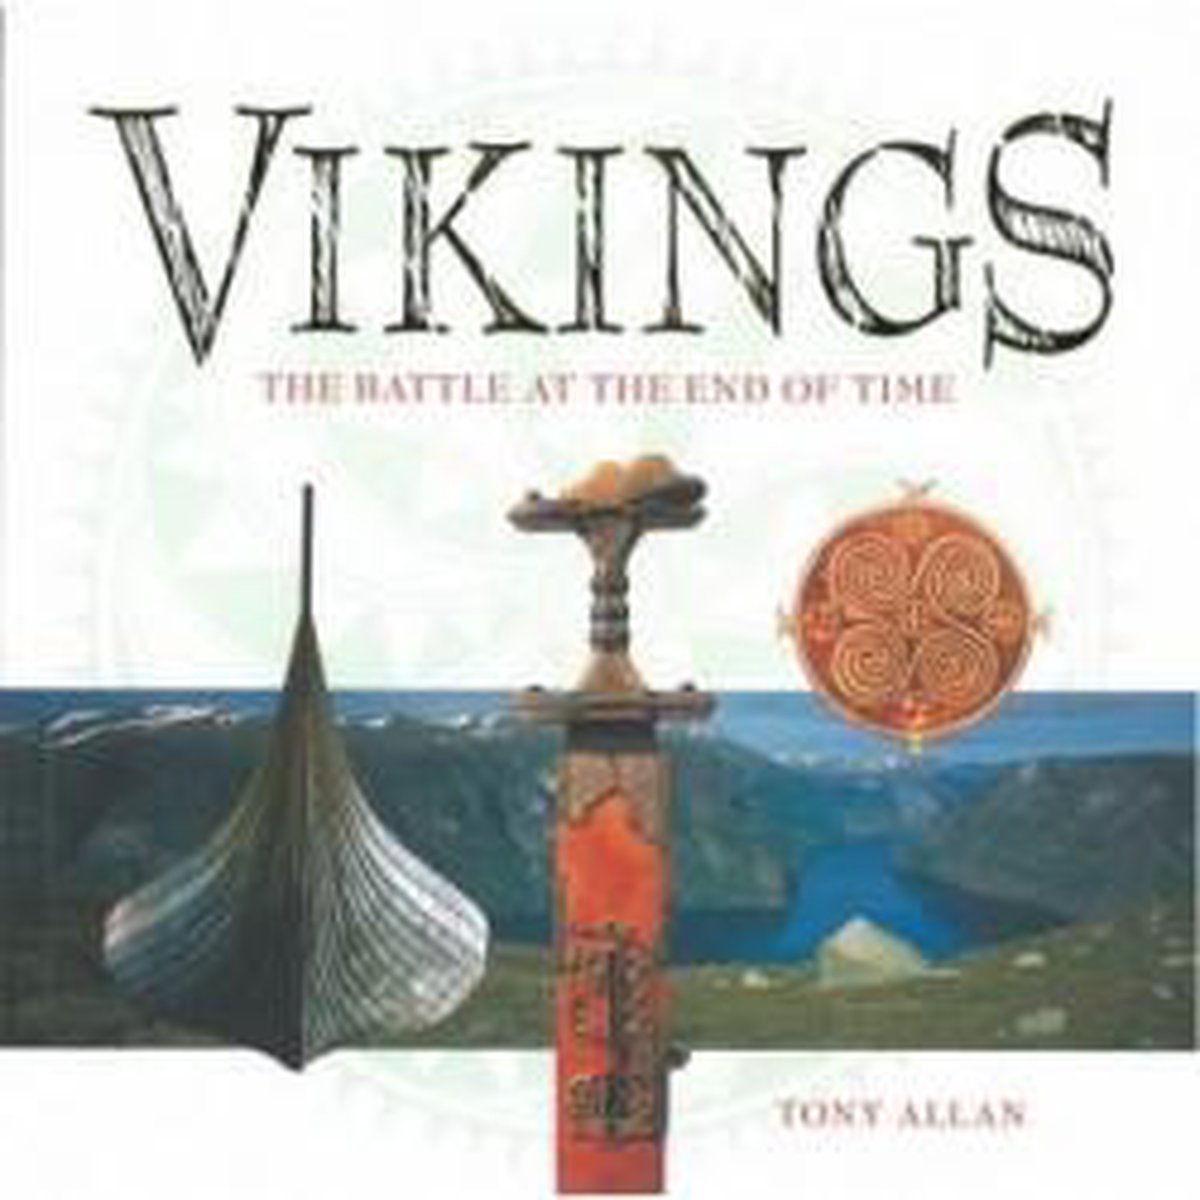 Vikingen Leven Mythen En Kunst